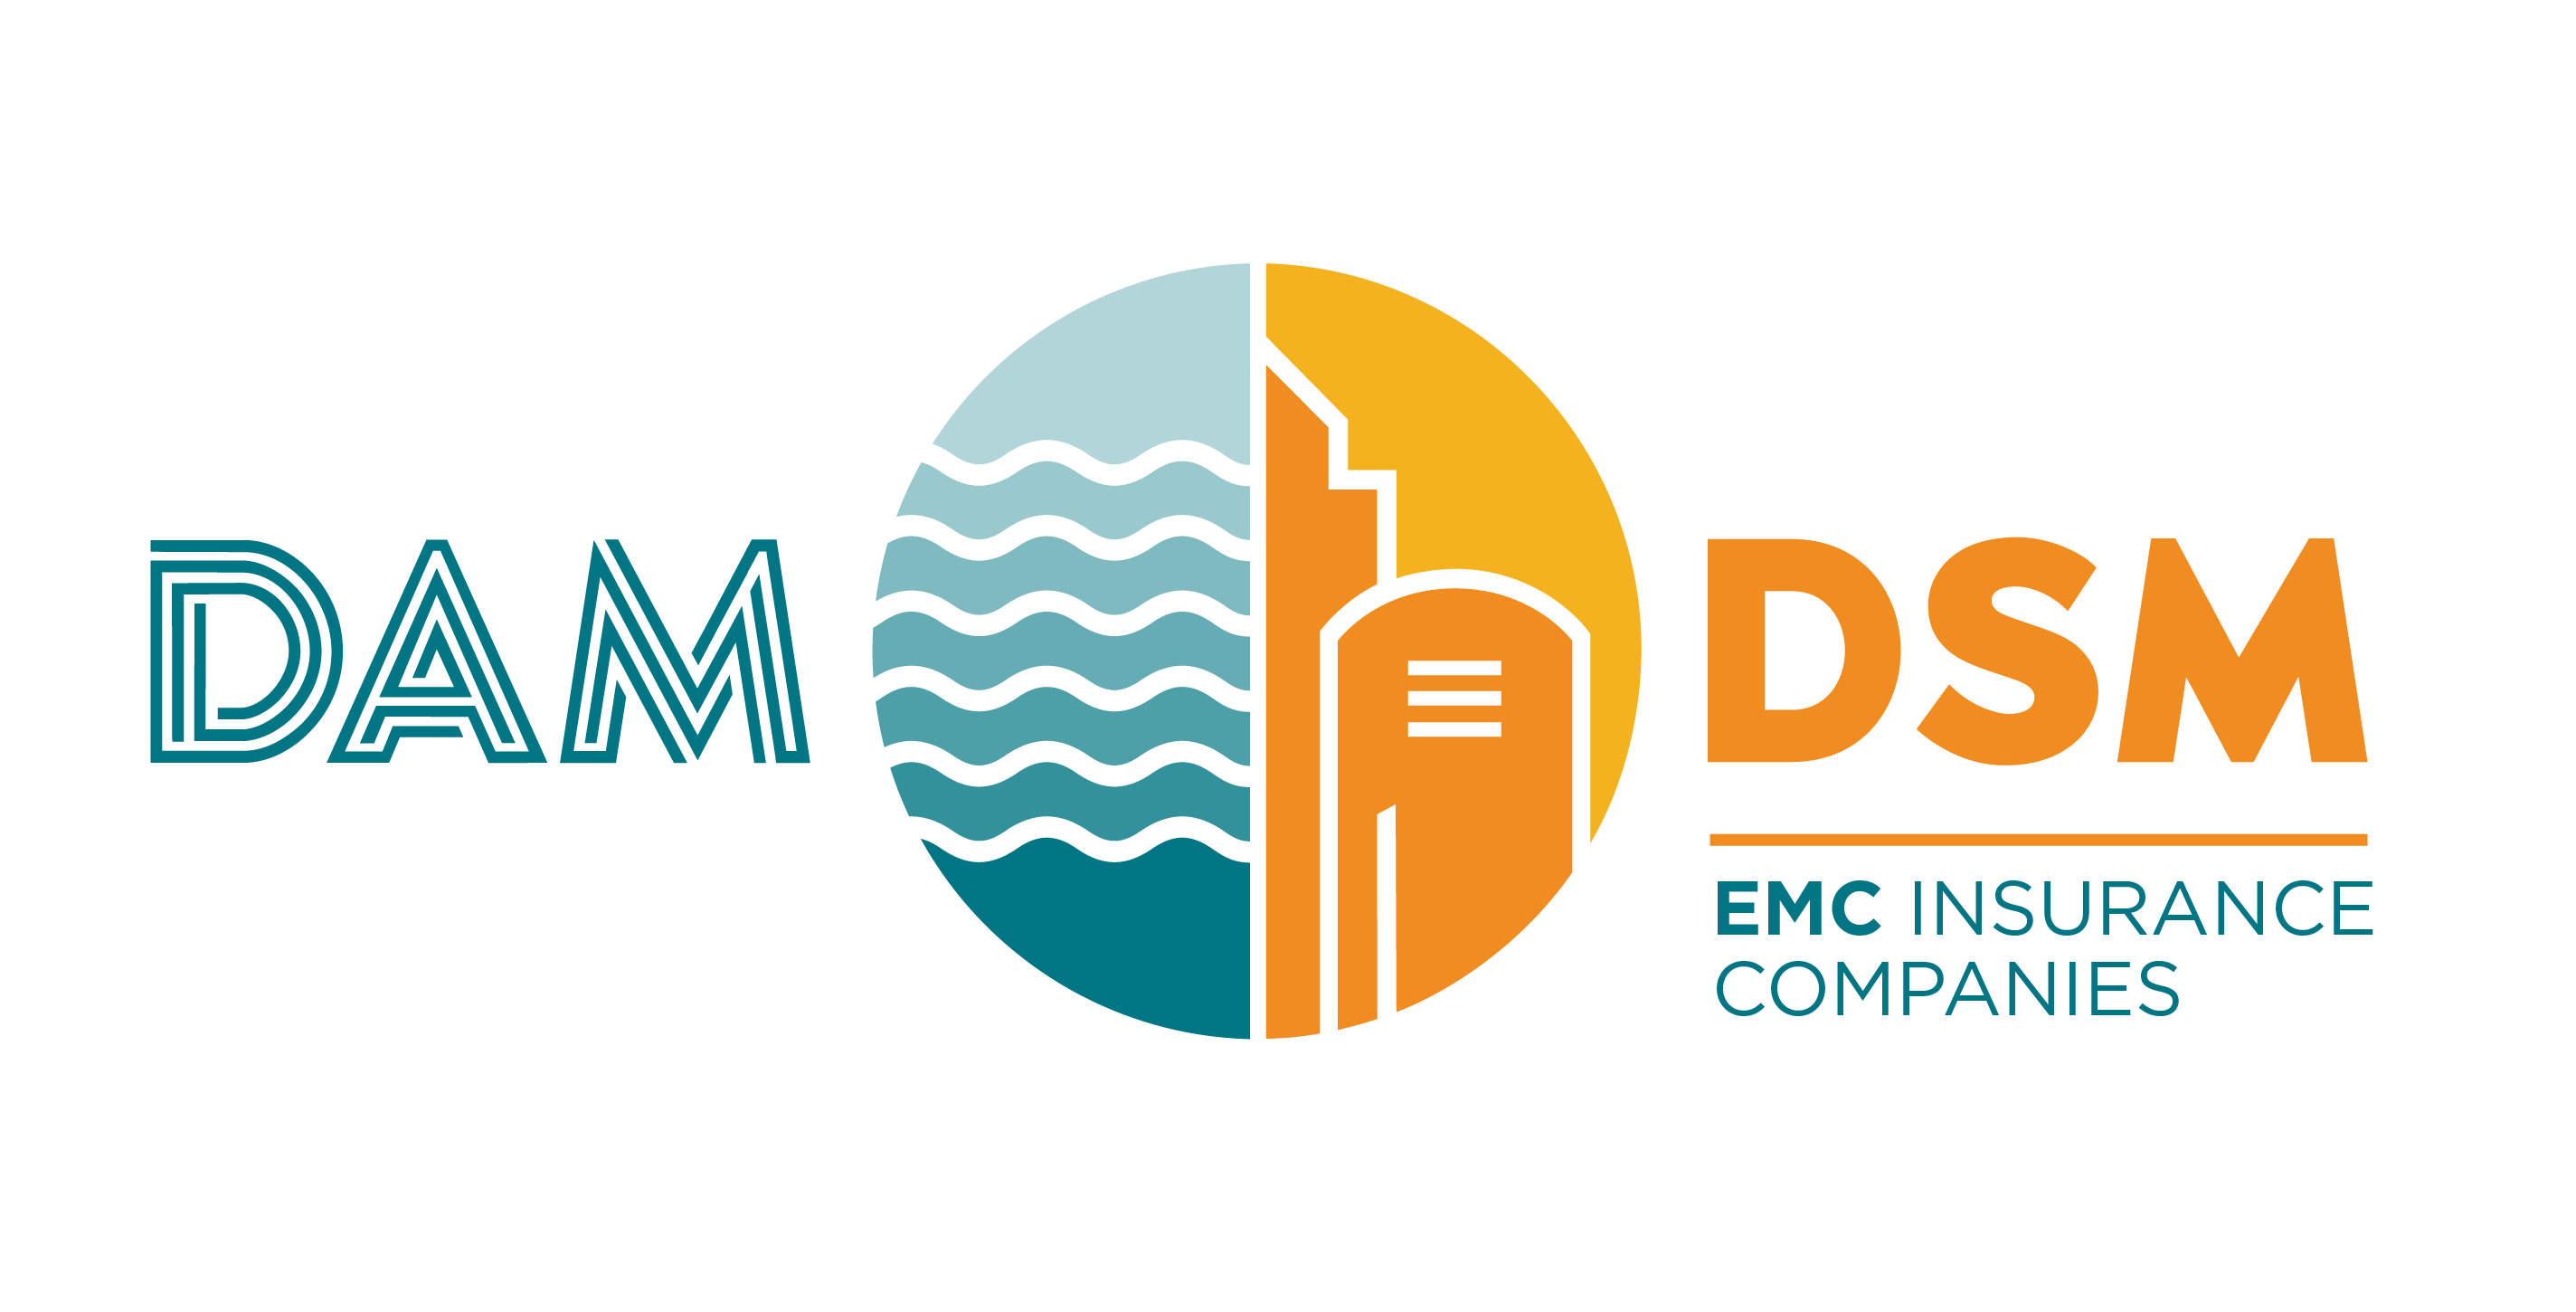 EMC DAM to DSM registration information at